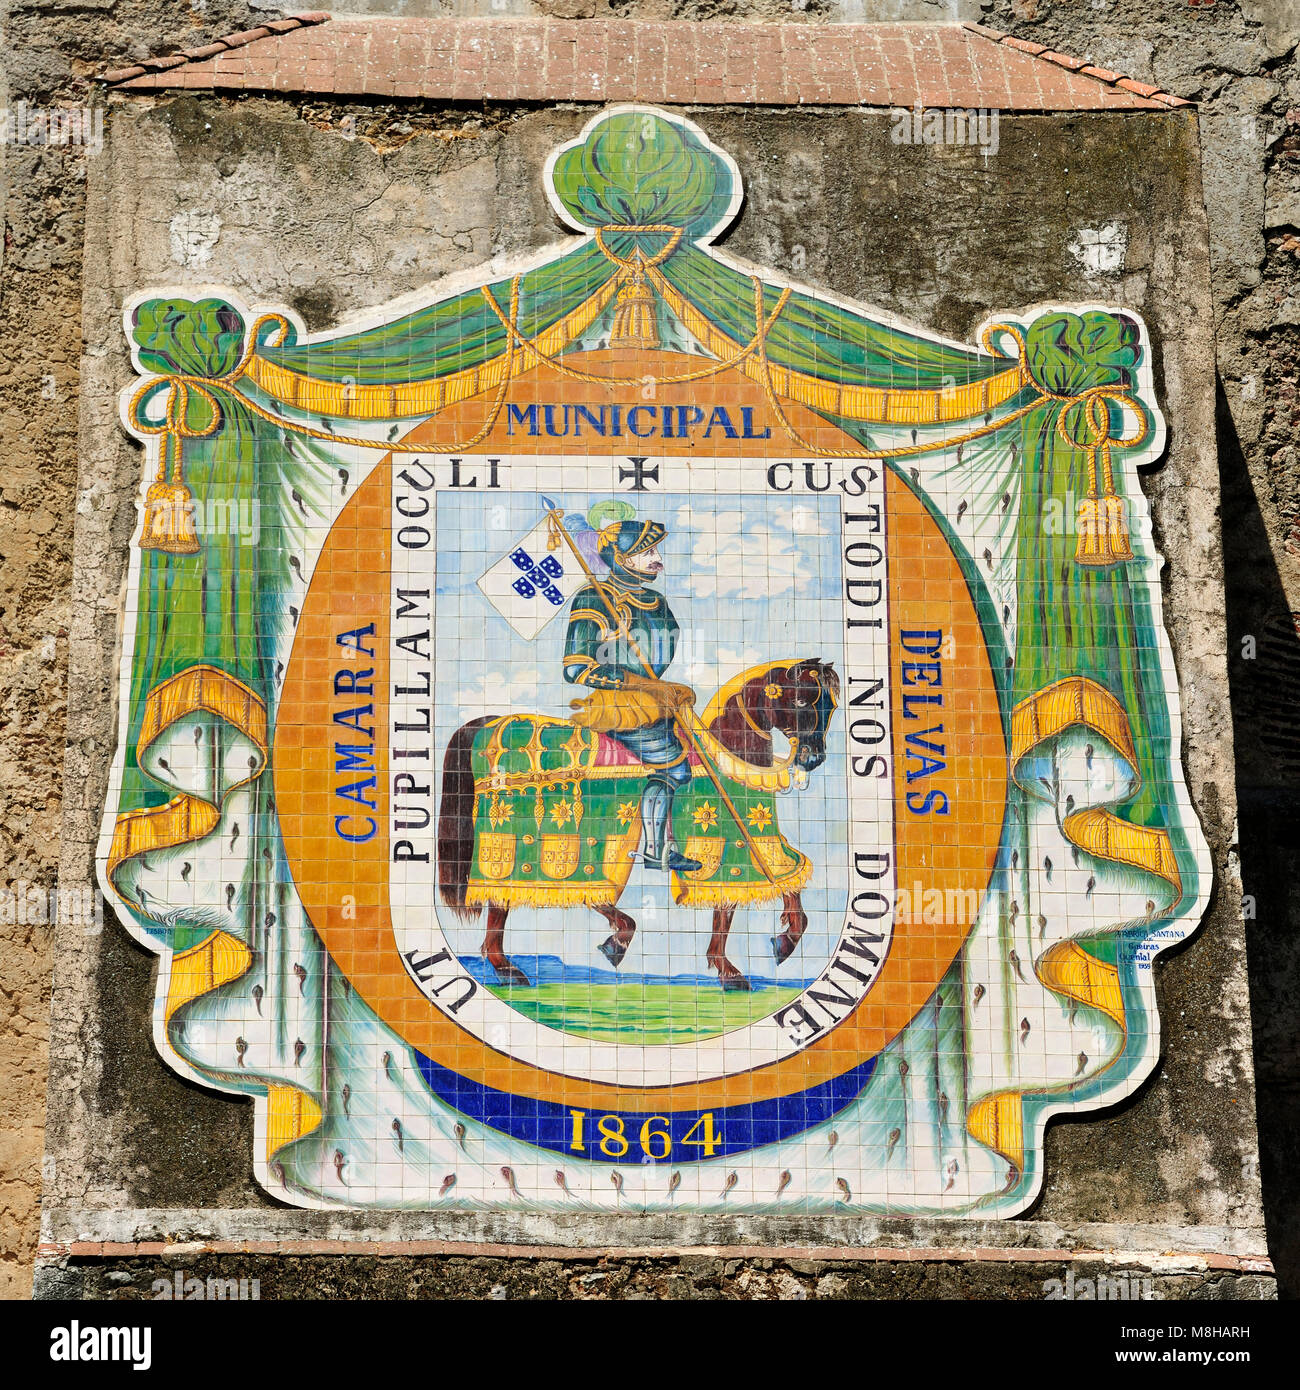 Ceramic tiles on the aqueduct of Amoreiras (16th century), a Unesco World Heritage Site. Elvas, Portugal Stock Photo